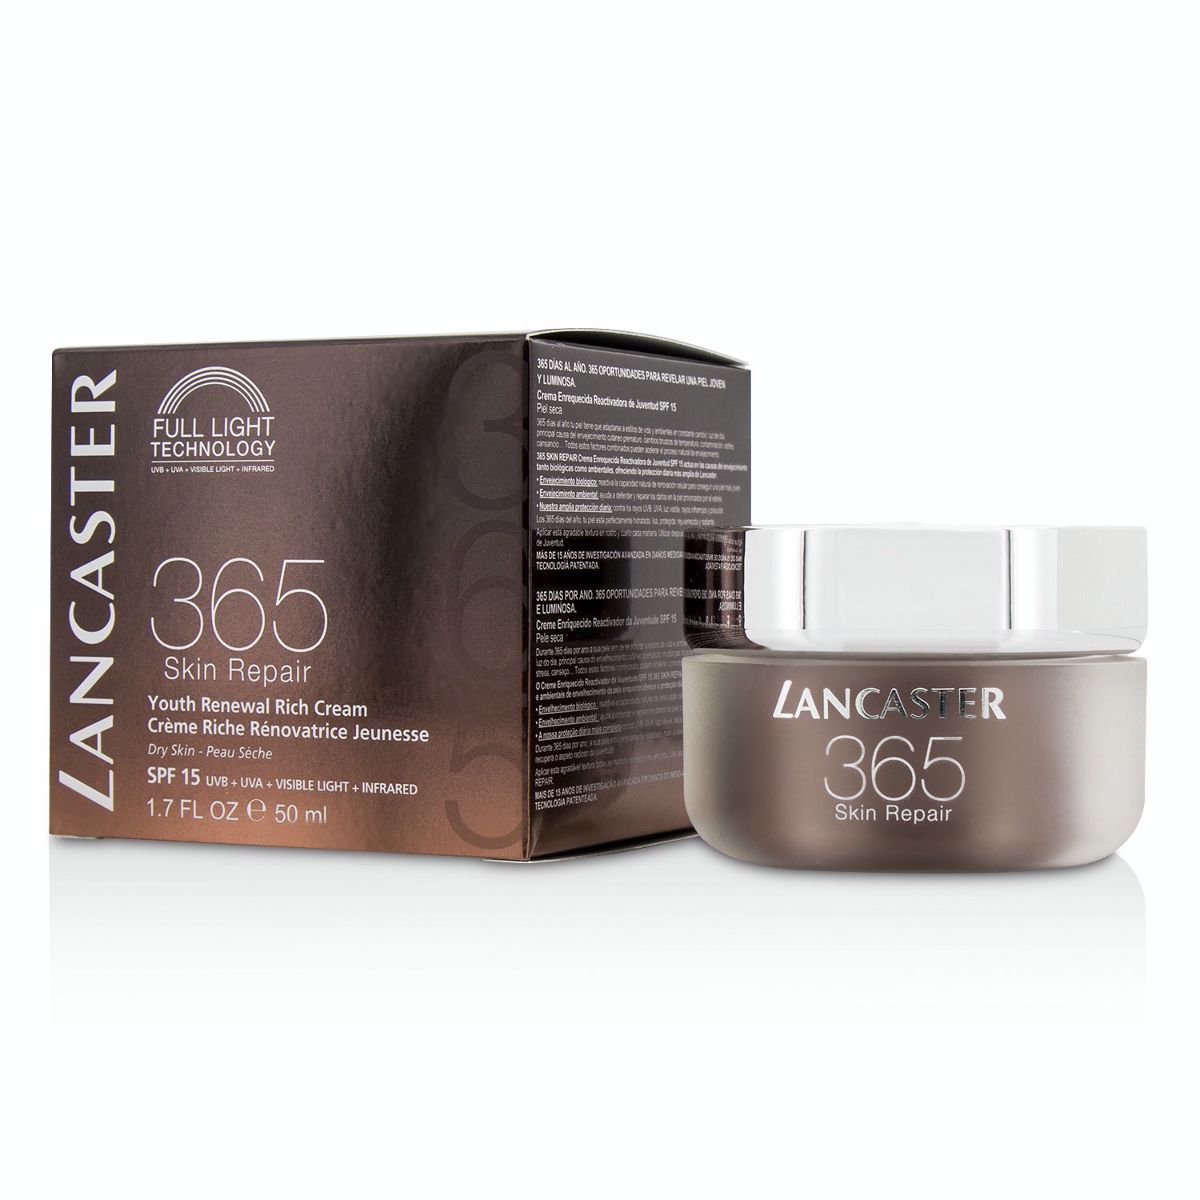 365 Skin Repair Youth Renewal Rich Cream SPF15 - Dry Skin Lancaster Image